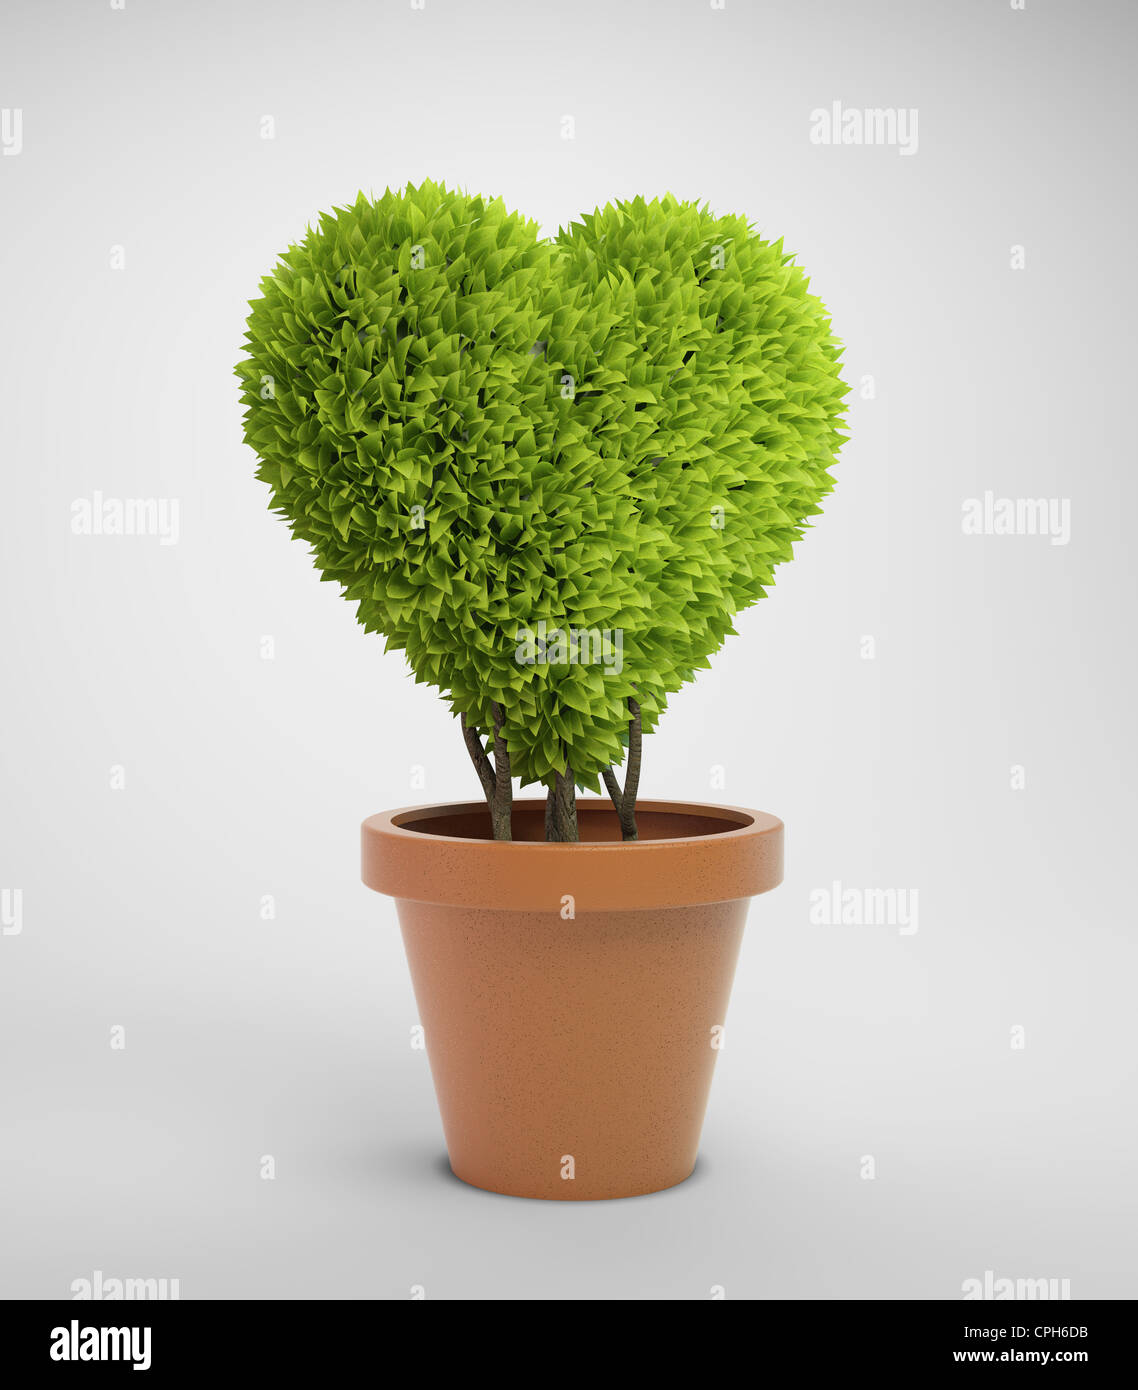 Pflanze in einem Topf in Herzform Stockfotografie - Alamy